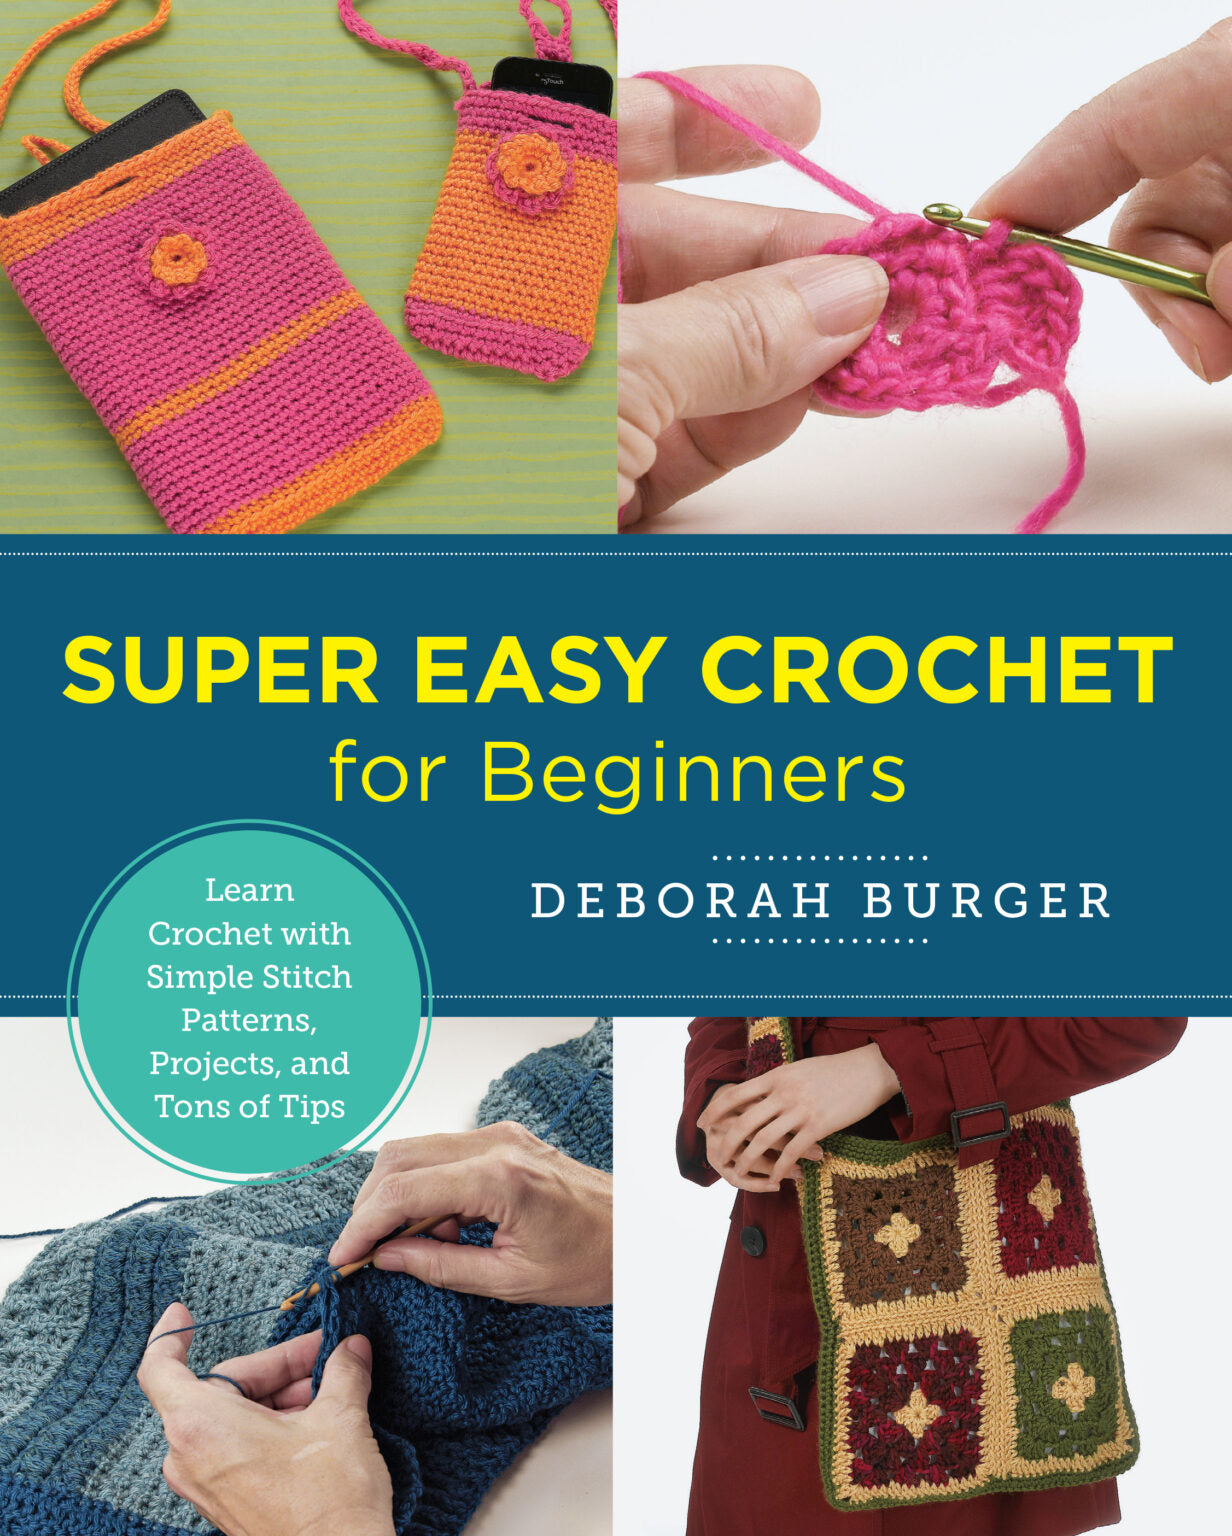 Ultimate Crochet Amigurumi Book: Beginner Friendly Patterns for Effortless  Crafting